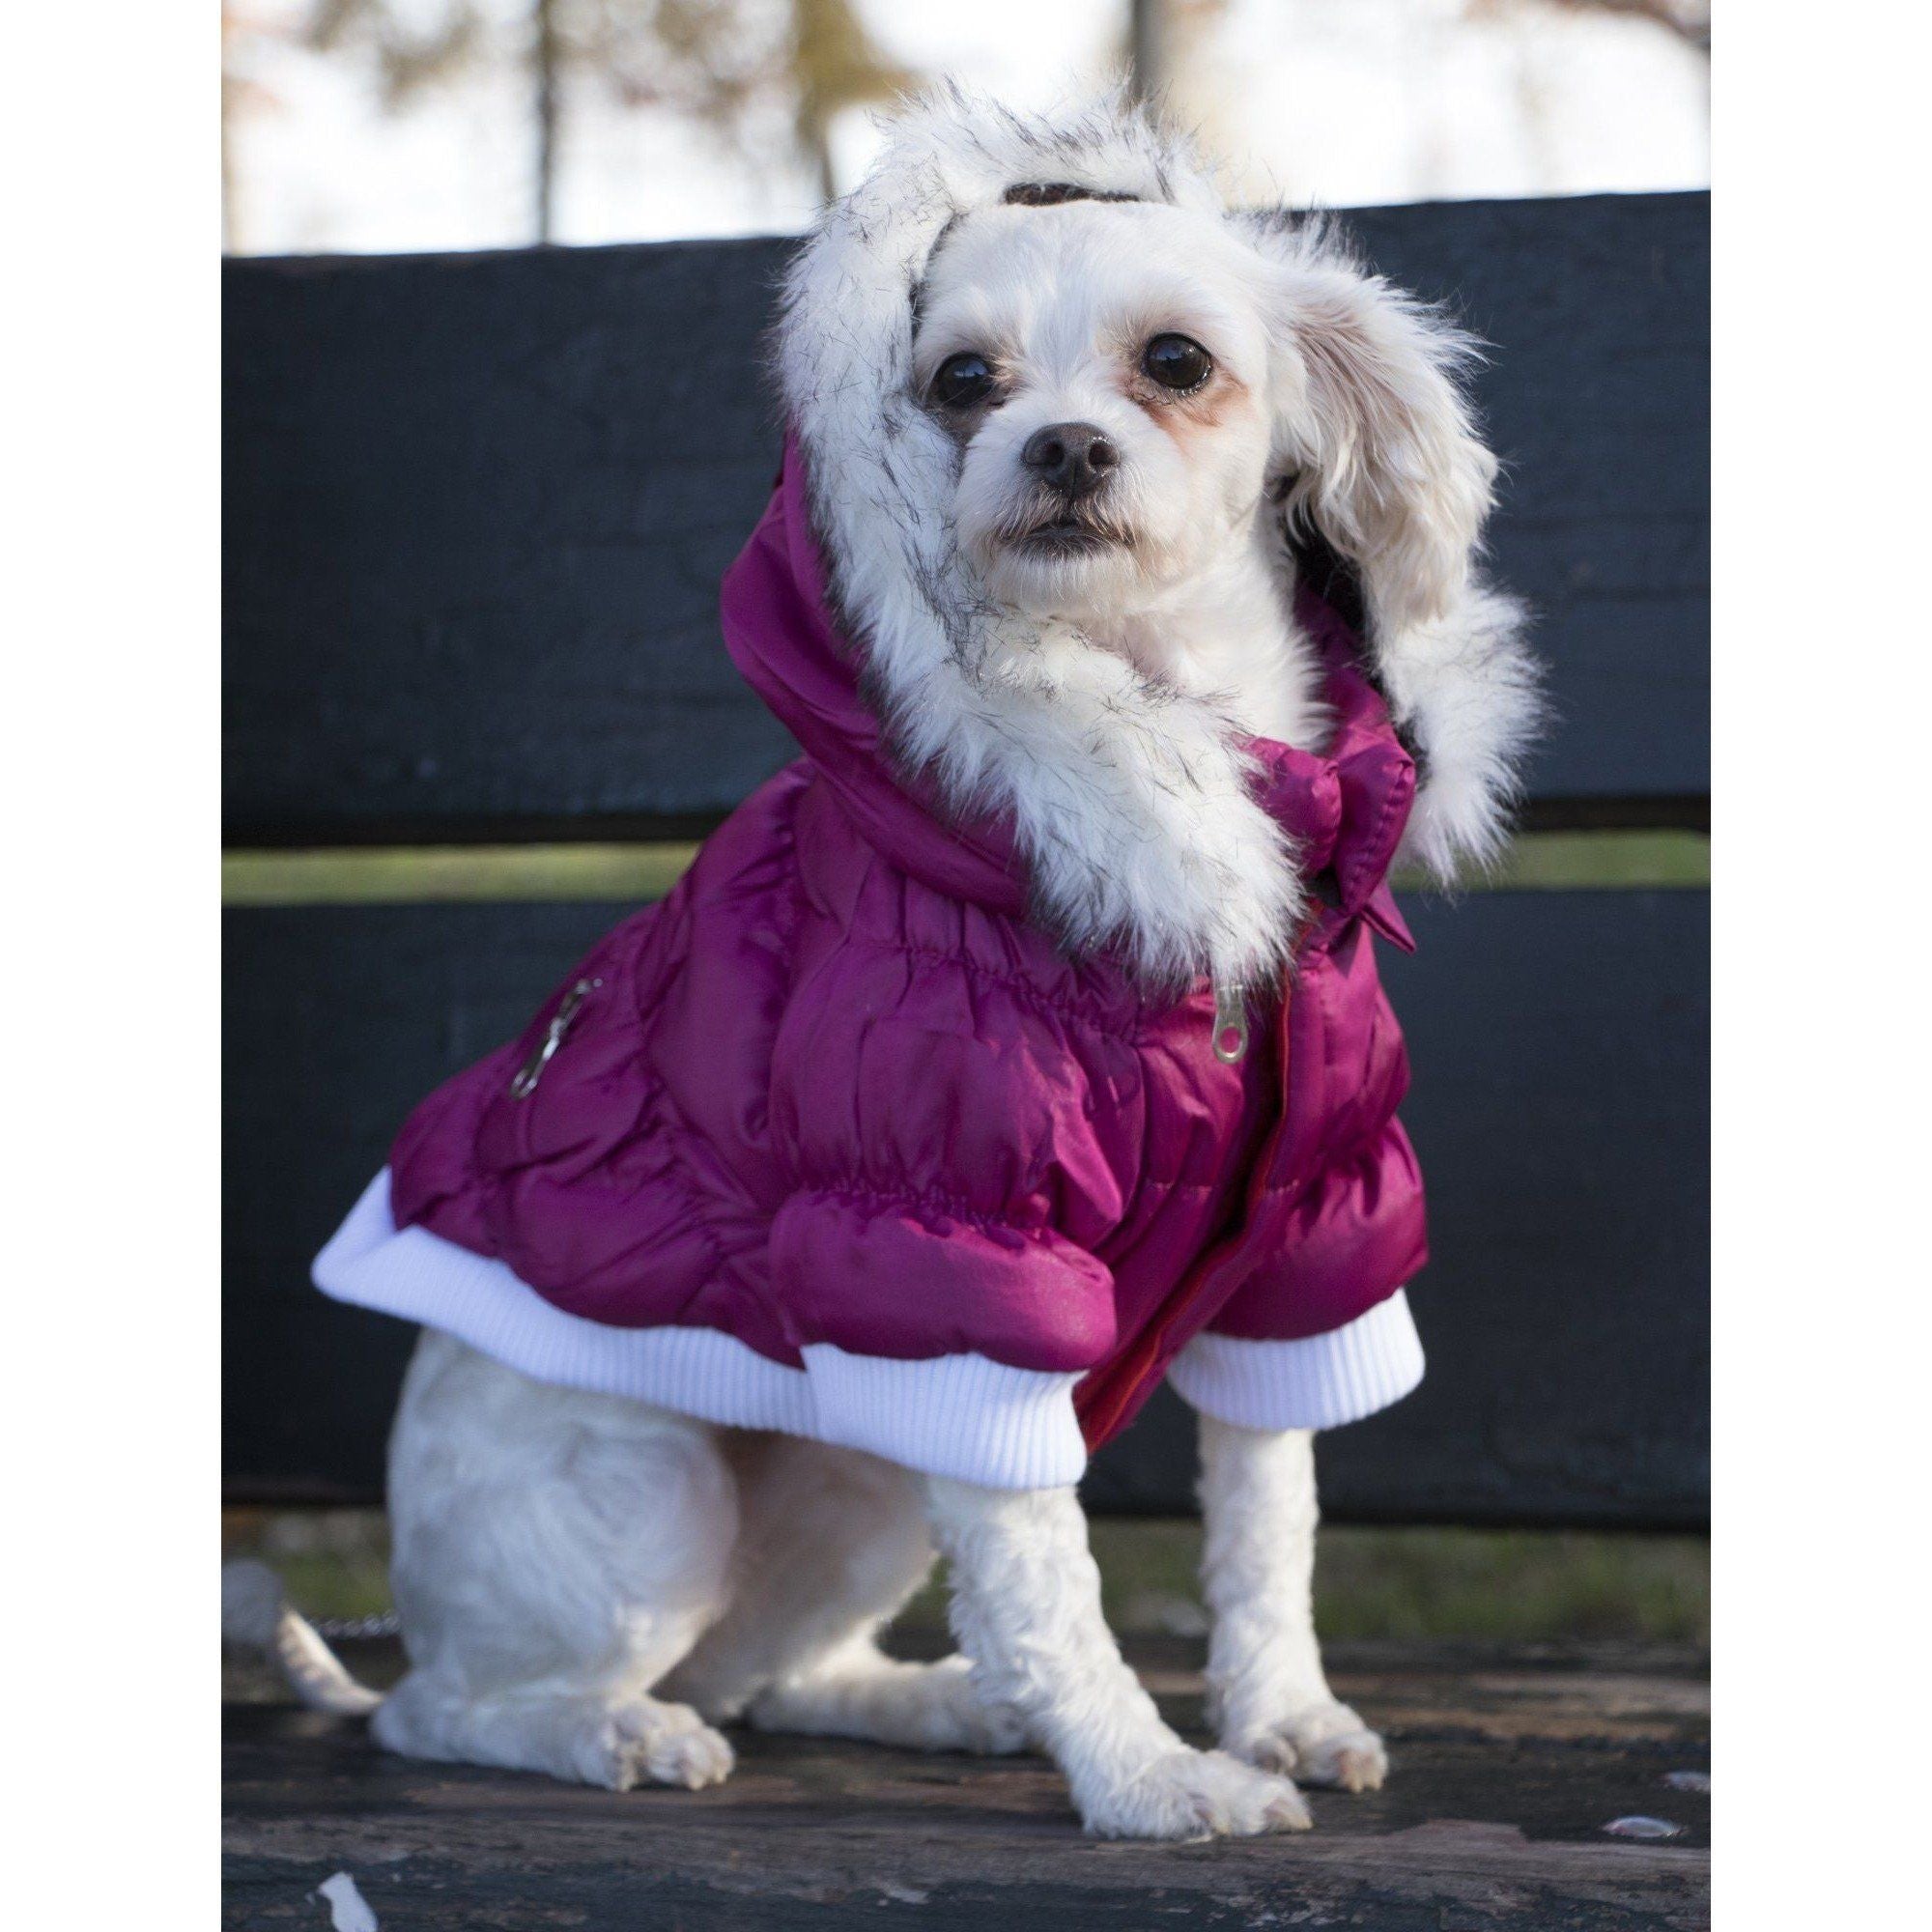 Pet Life ® Classic Metallic Fashion 3M Insulated Dog Coat Parka  w/ Removable Hood  